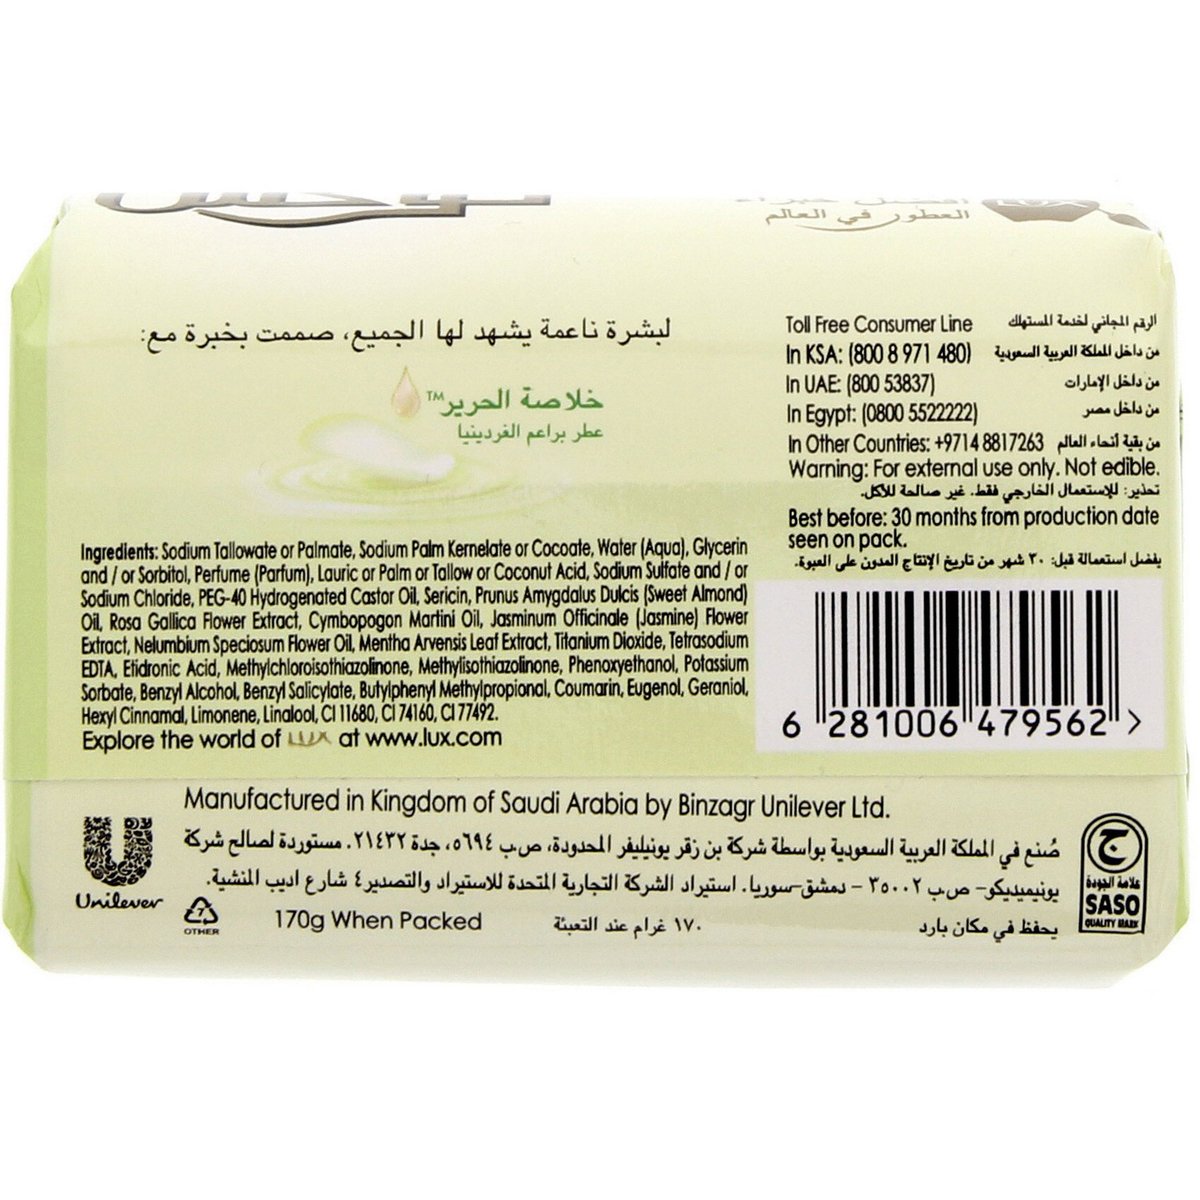 Lux Soap Silk Sensation  170g